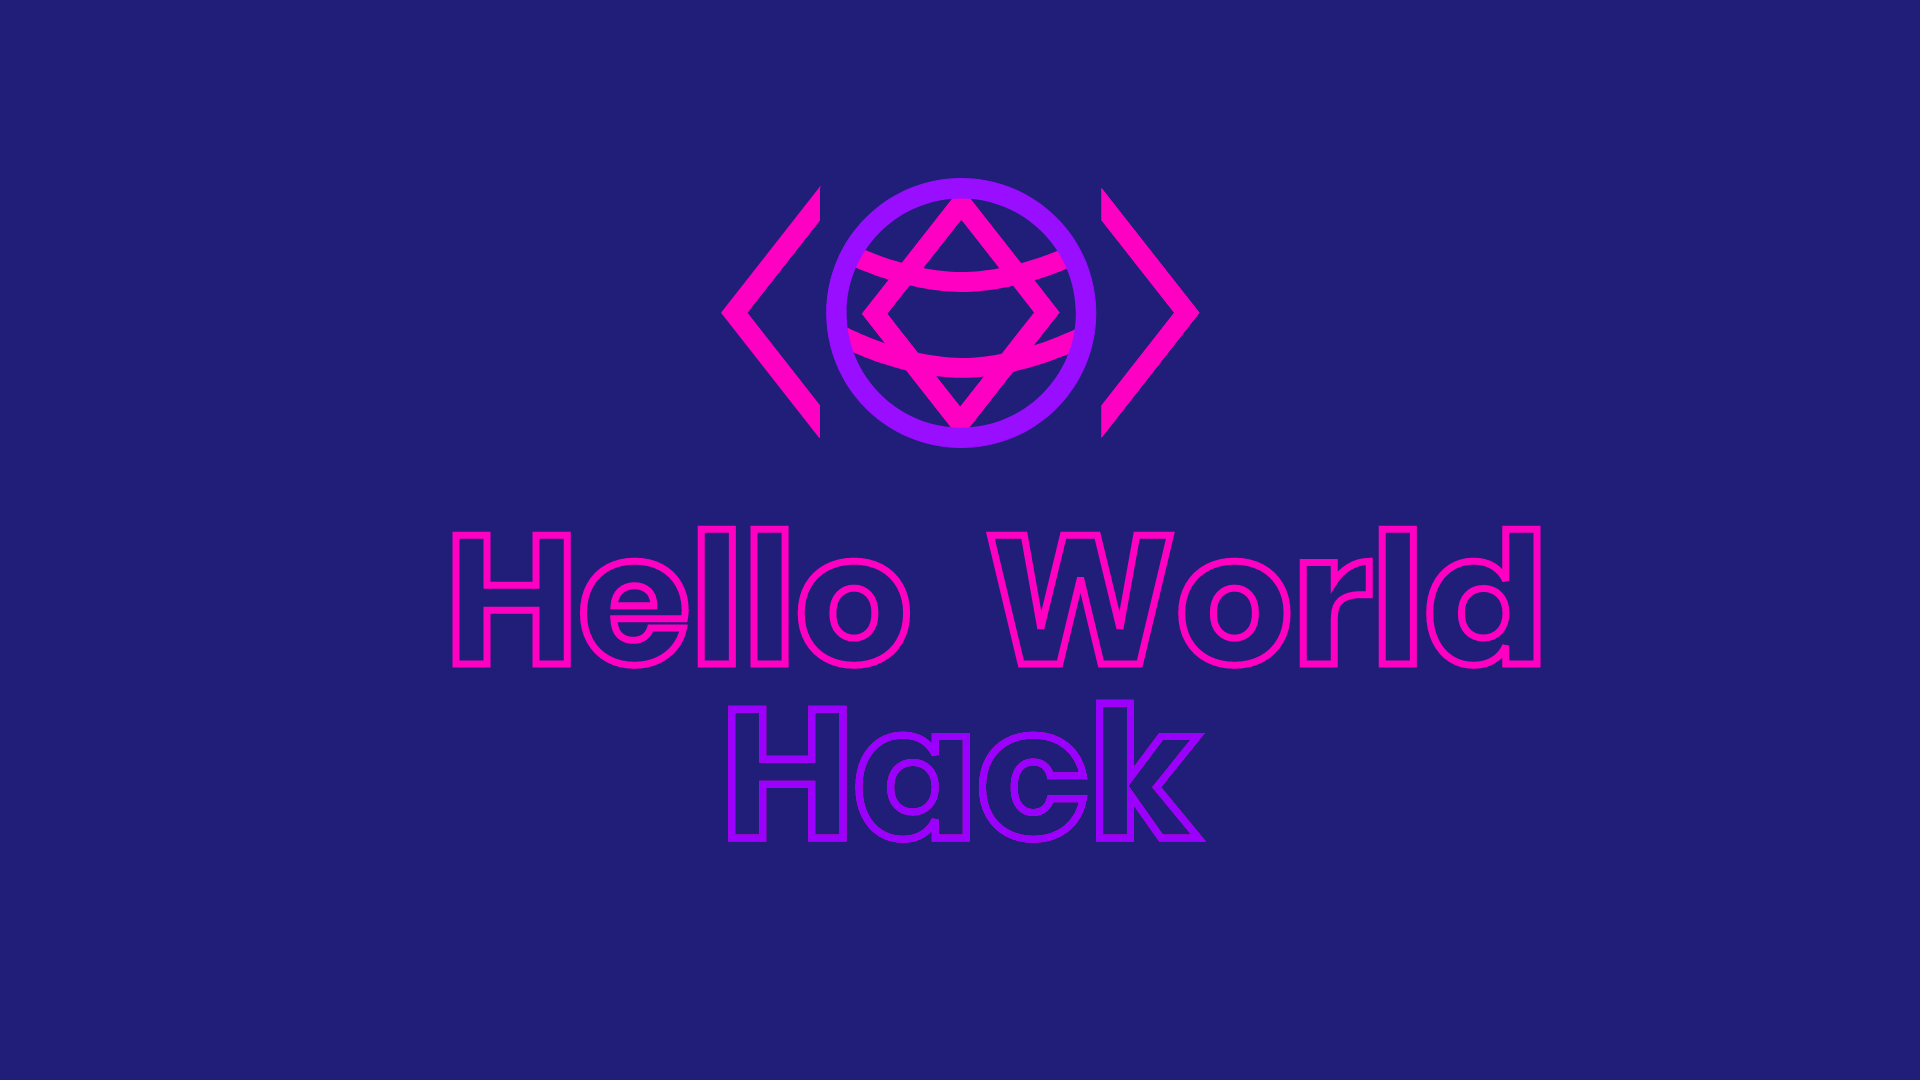 Hello world hack 2020 logo